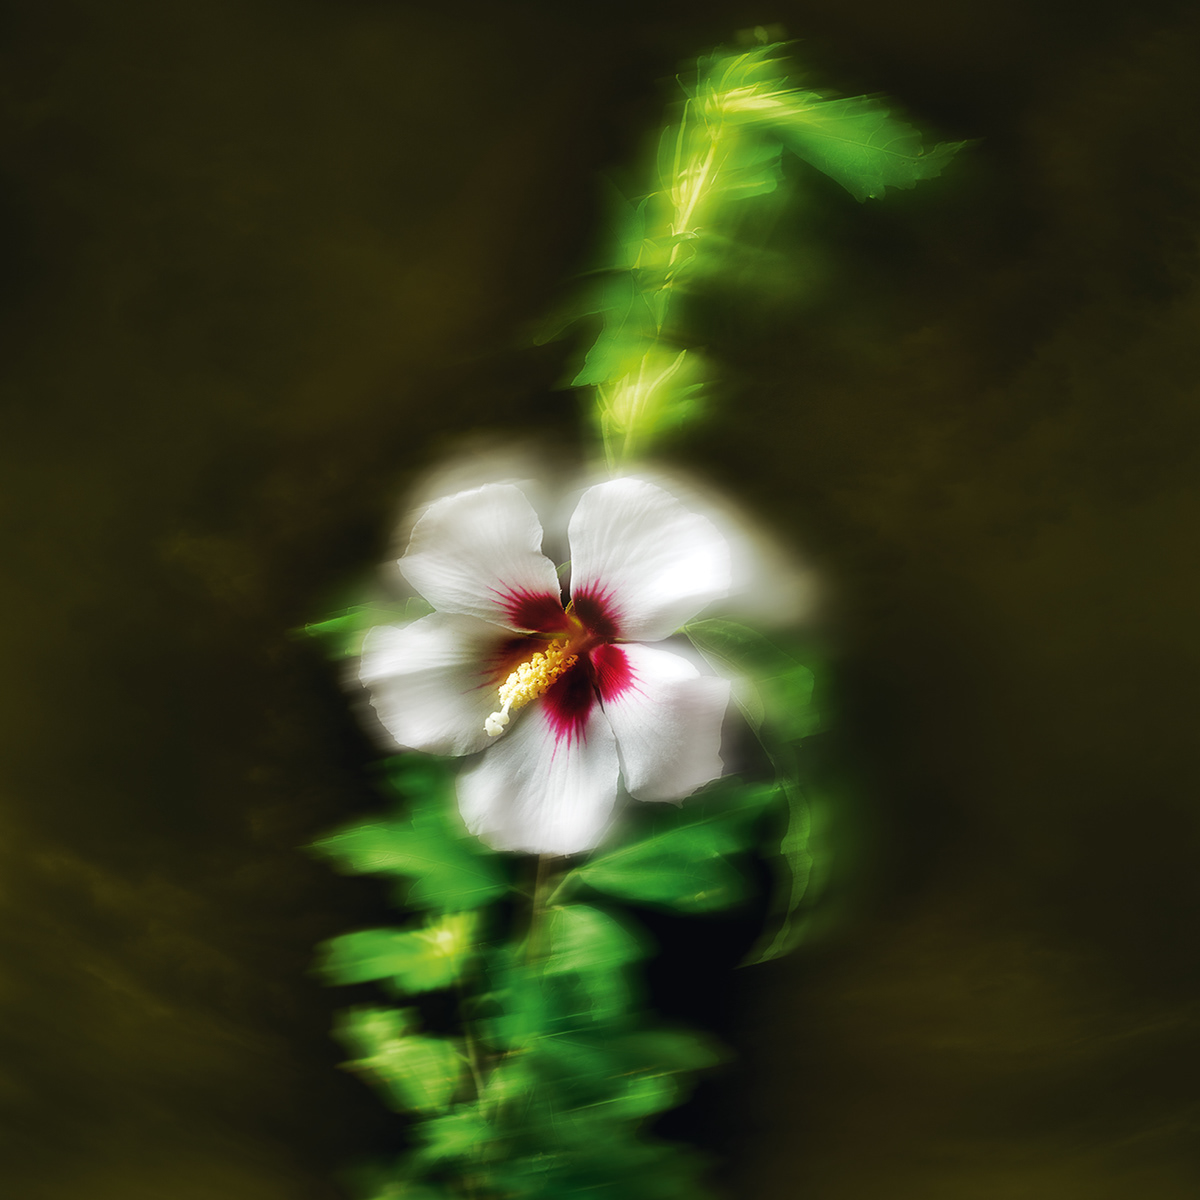 Flowers Motion blur
